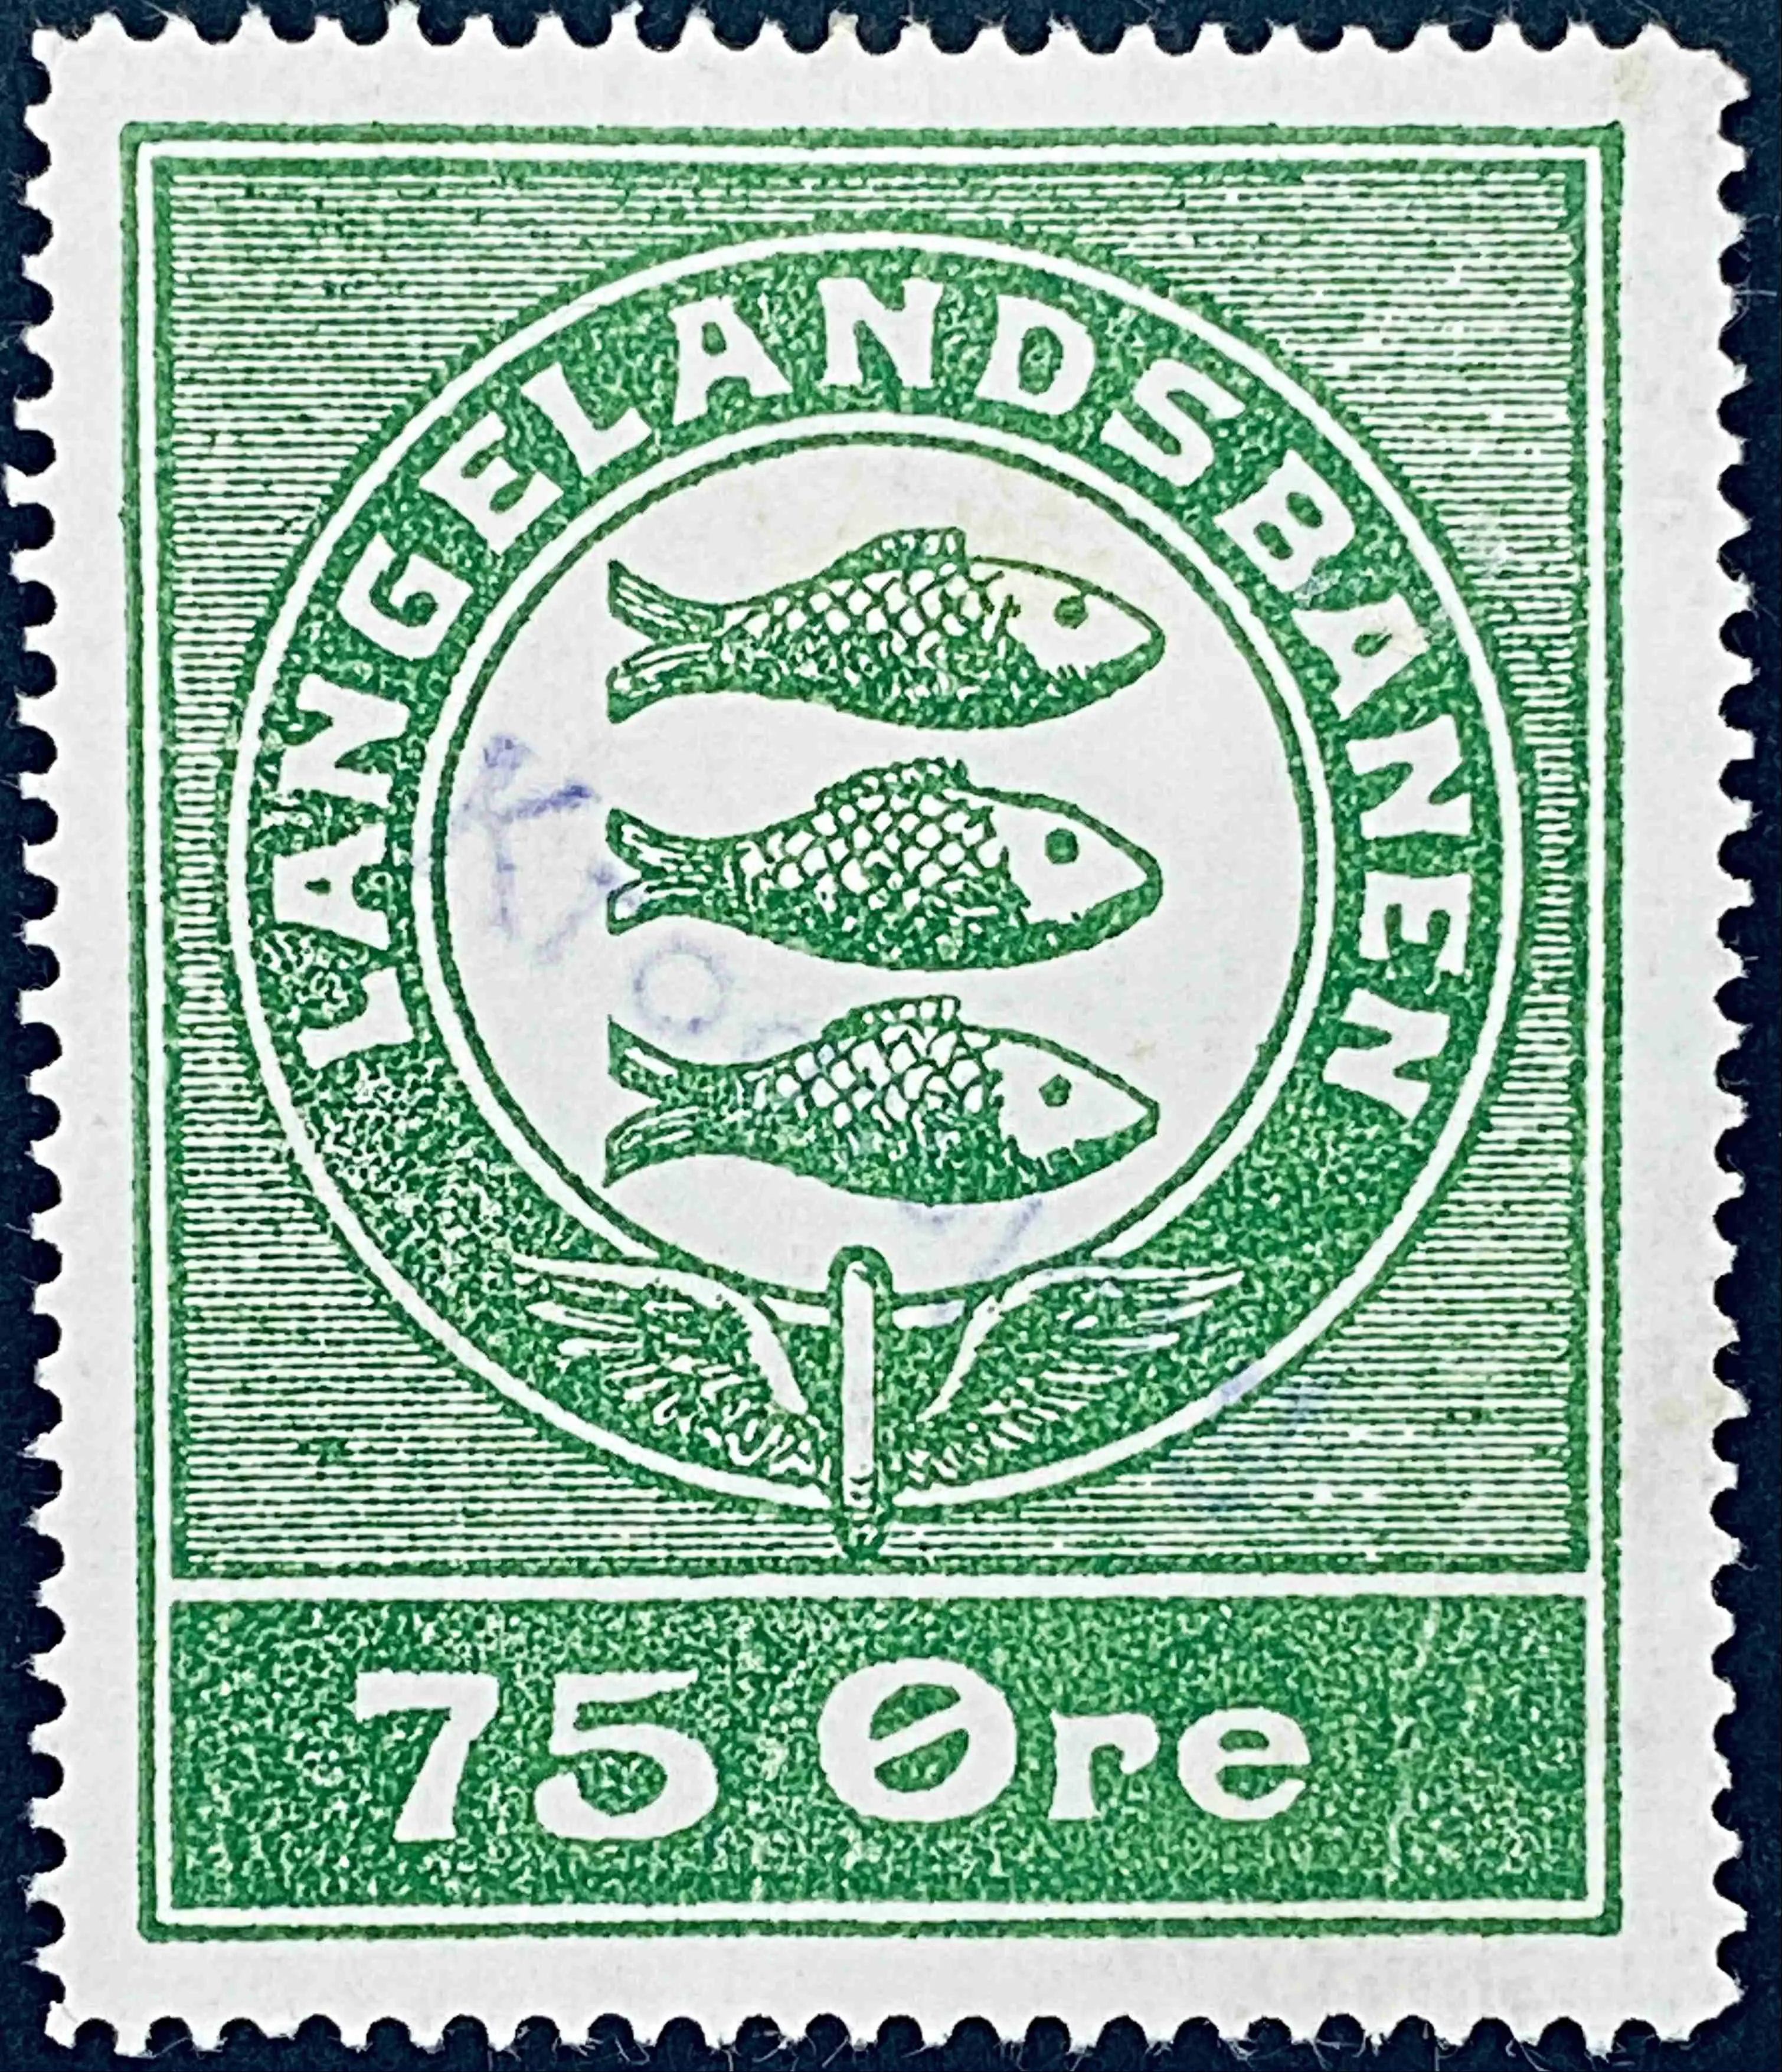 LB 16 - 75 Øre Motiv: Rudkøbings byvåben - Grøn.